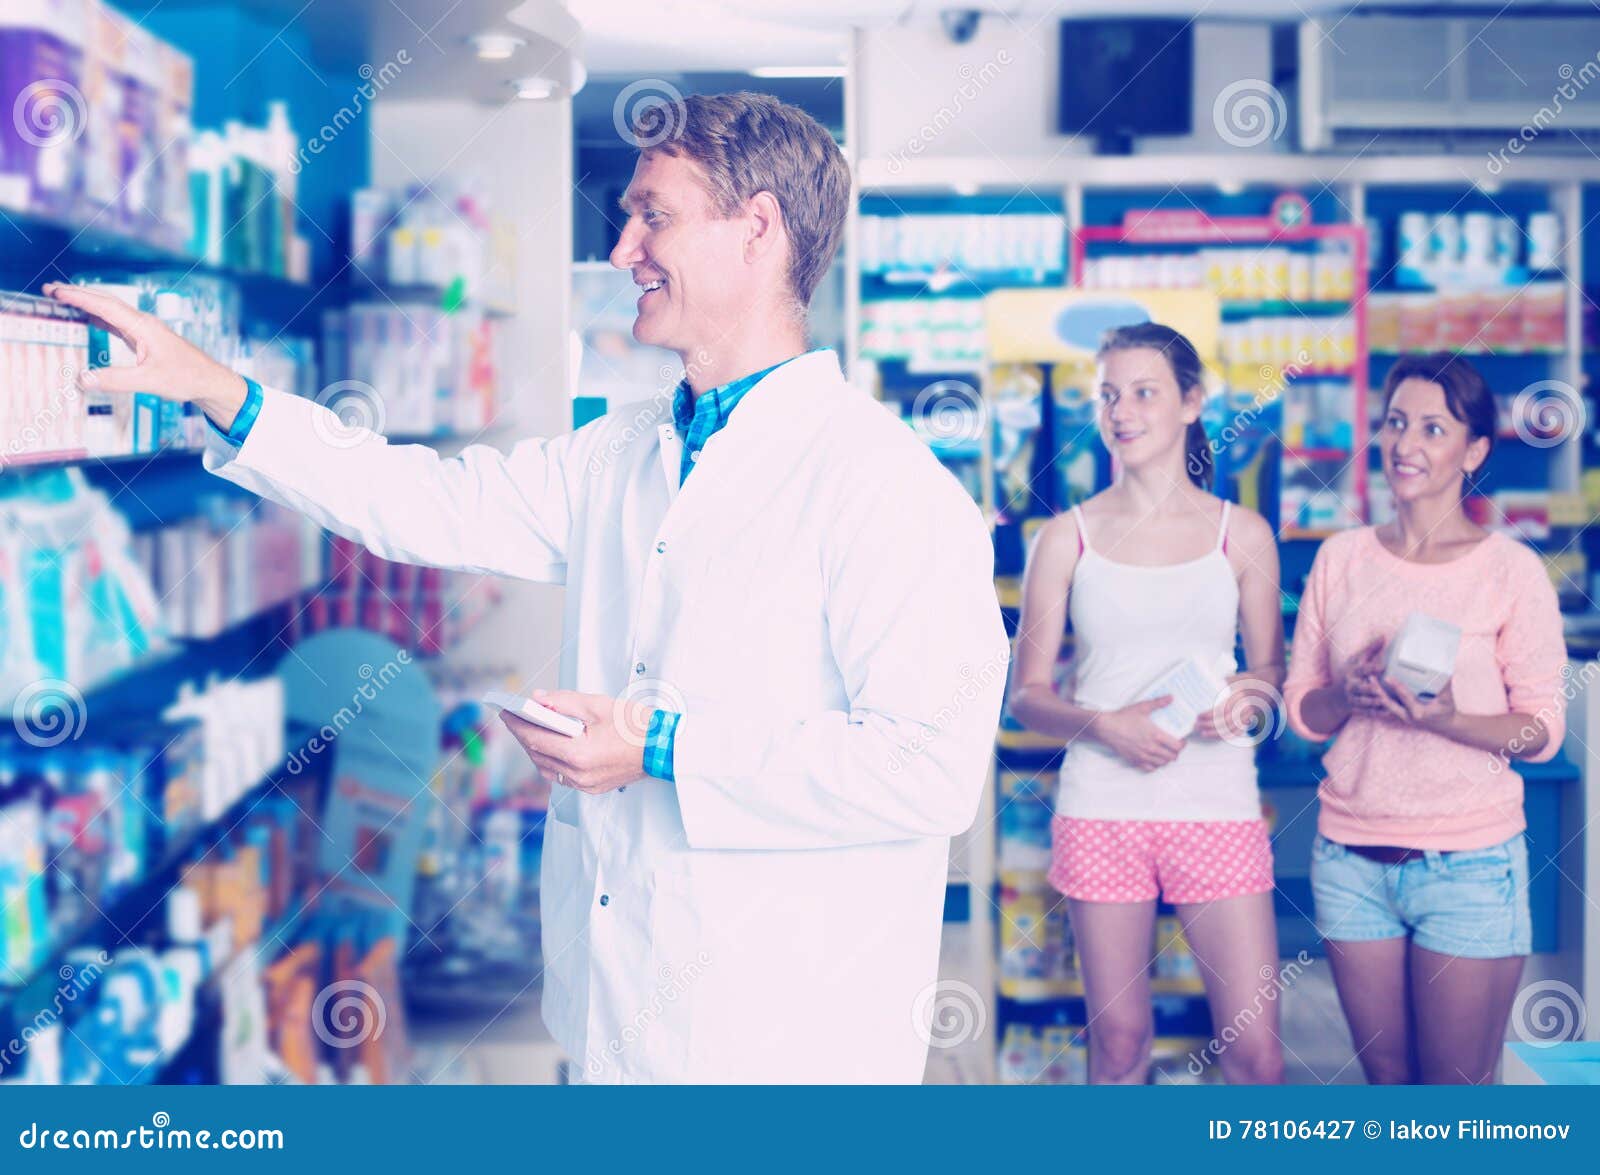 man druggist in white coat working in pharmacy